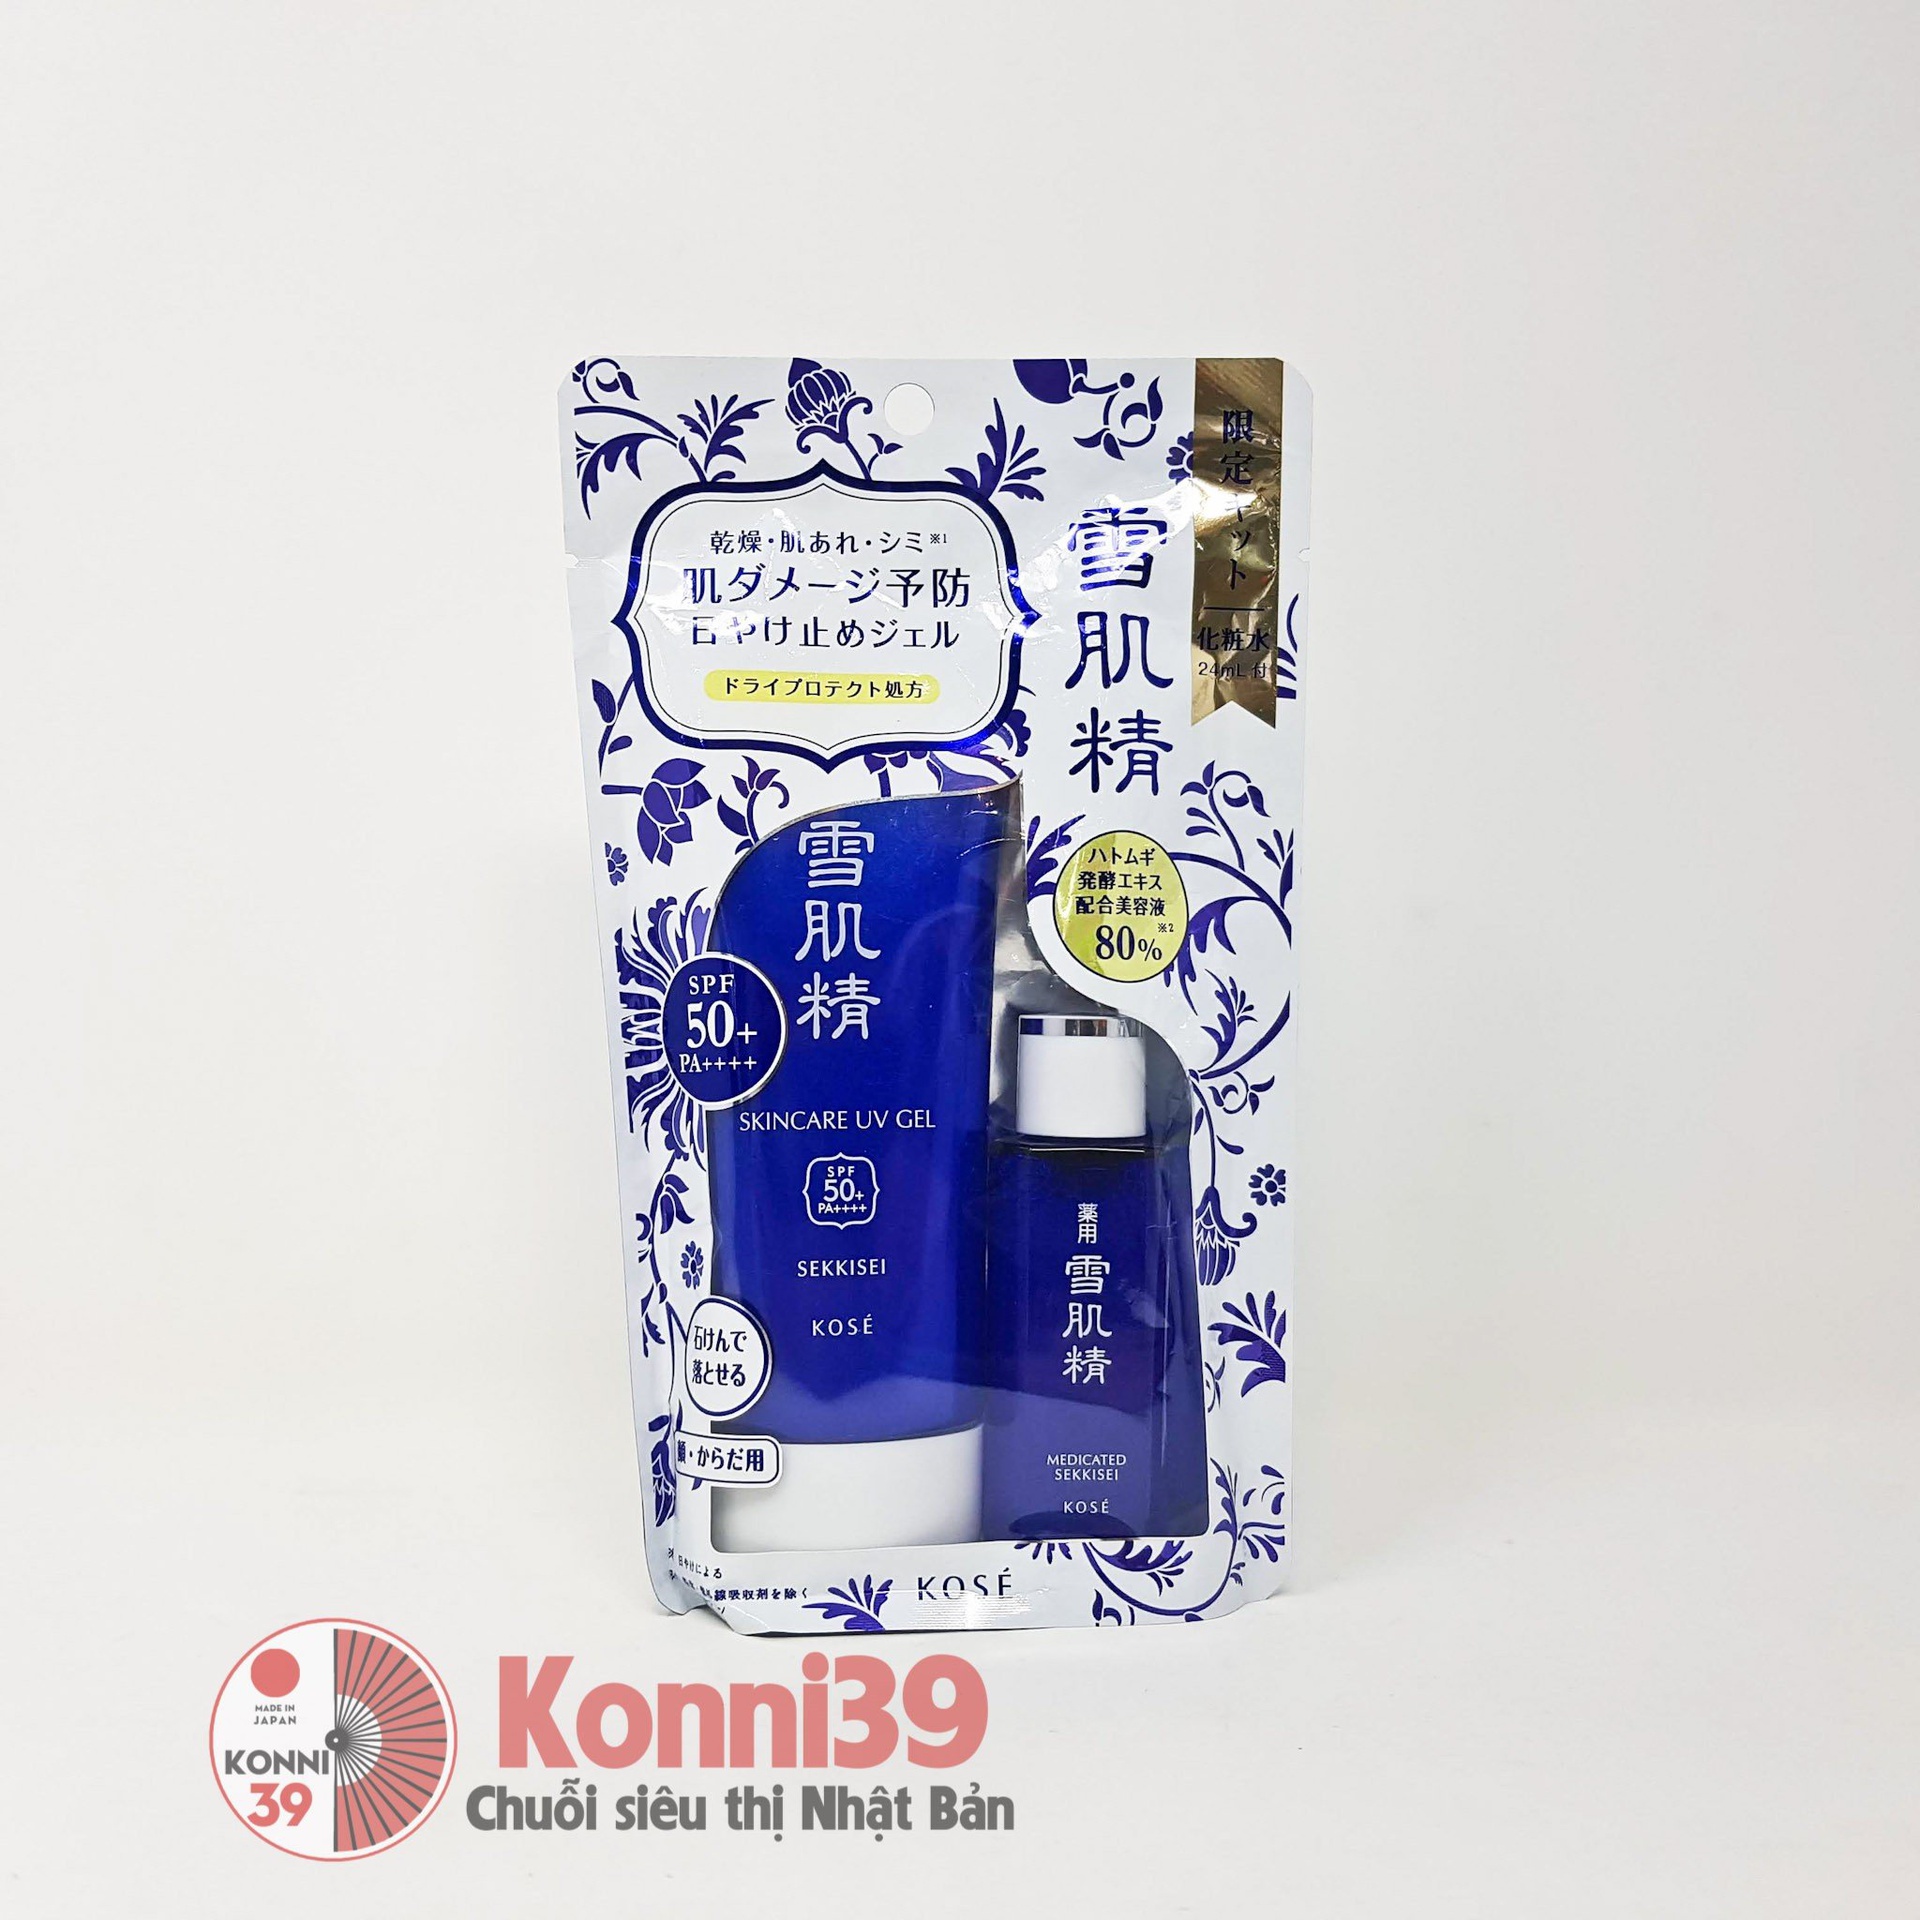 Kem chống nắng Kose Sekkisei Skin Care UV MILK SPF50+PA++++ 90g (tặng nước hoa hồng 24ml)